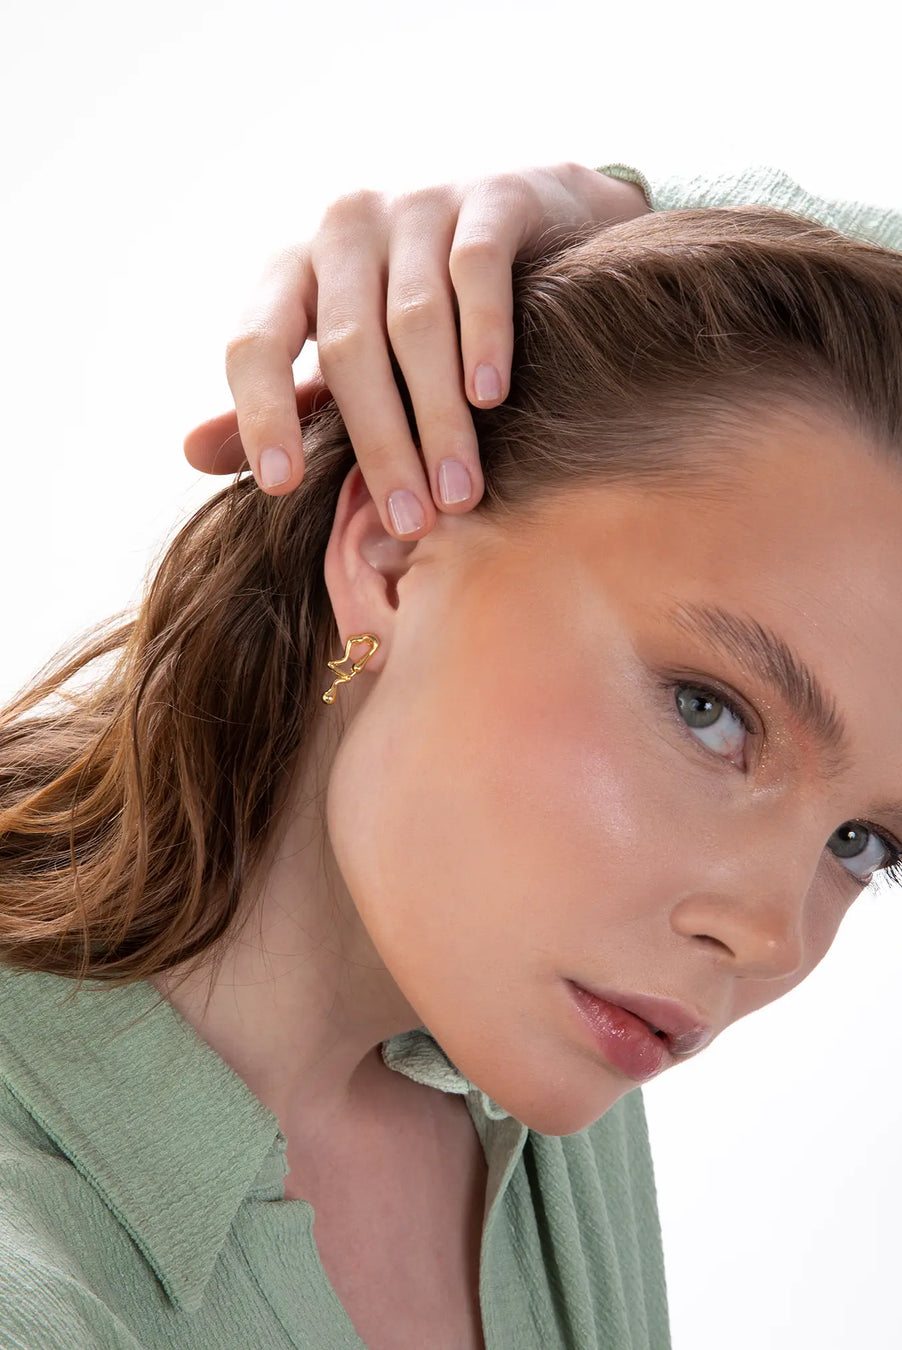 ATHENA Earrings. Asymmetrical fluid or melting design earrings, 18K gold vermeil, handmade, hypoallergenic, water-resistant